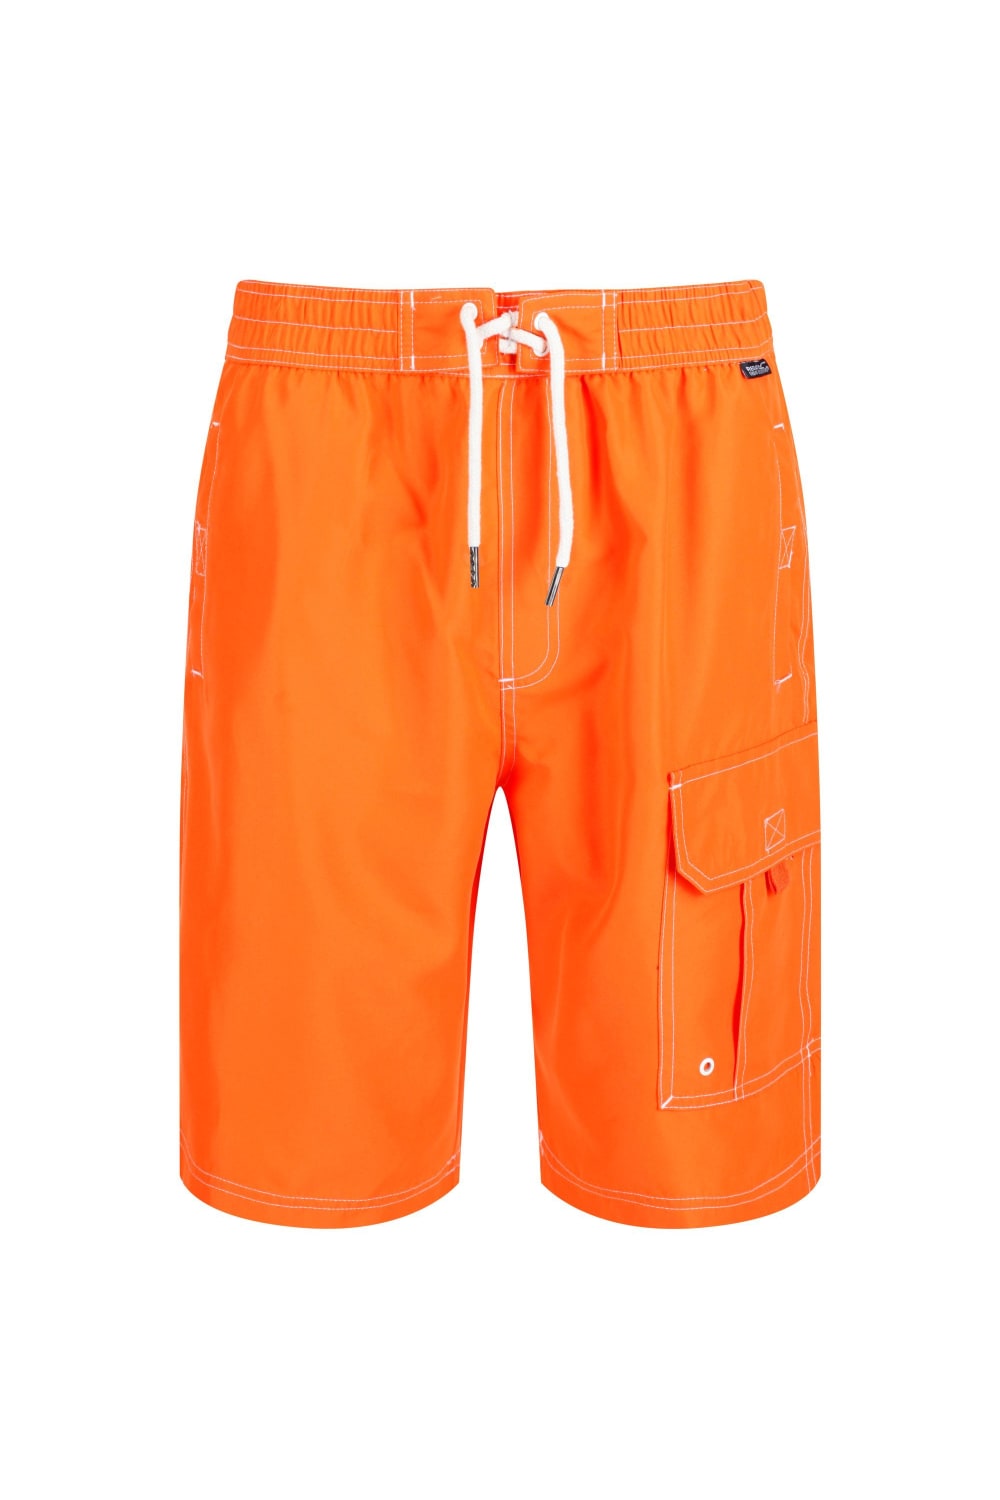 Regatta Mens Hotham III Mesh Quick Drying Board Shorts (Blaze Orange)